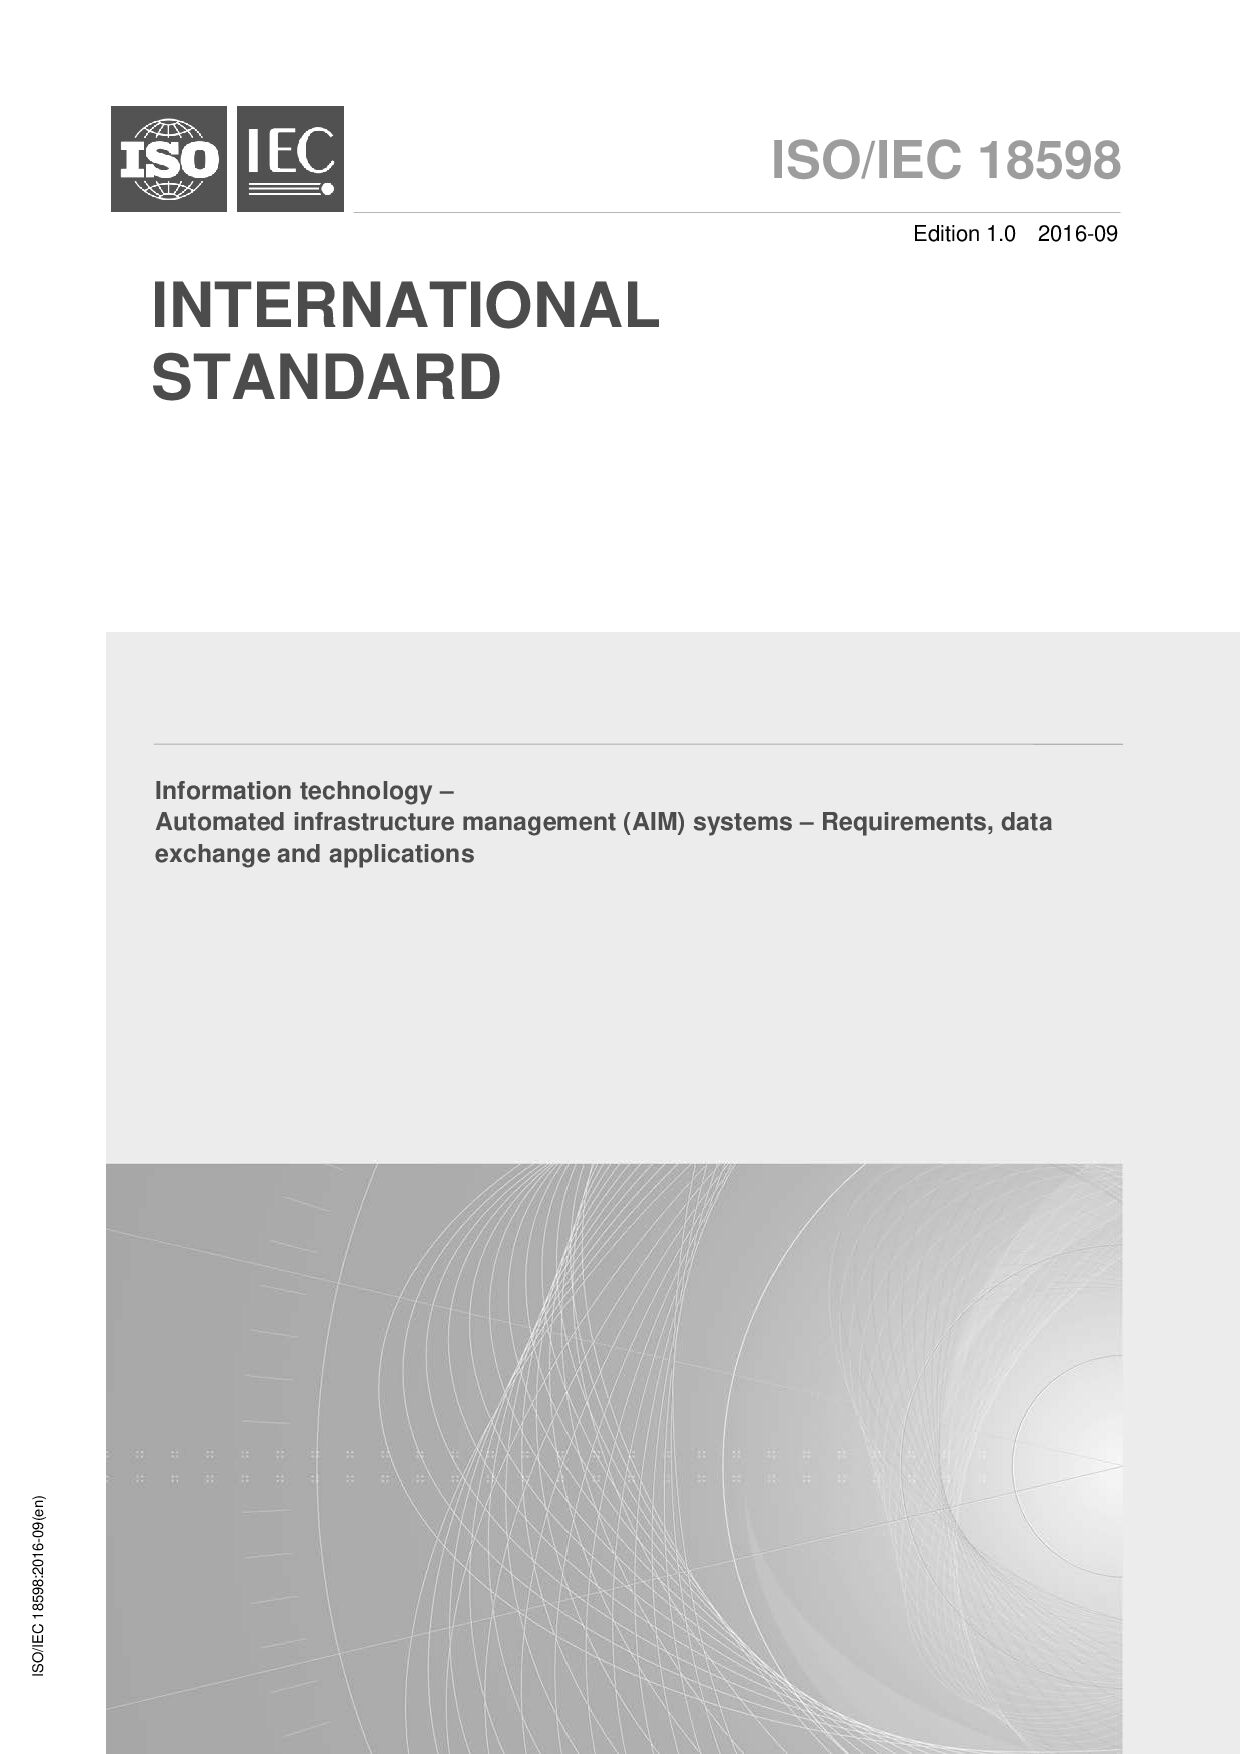 ISO/IEC 18598:2016